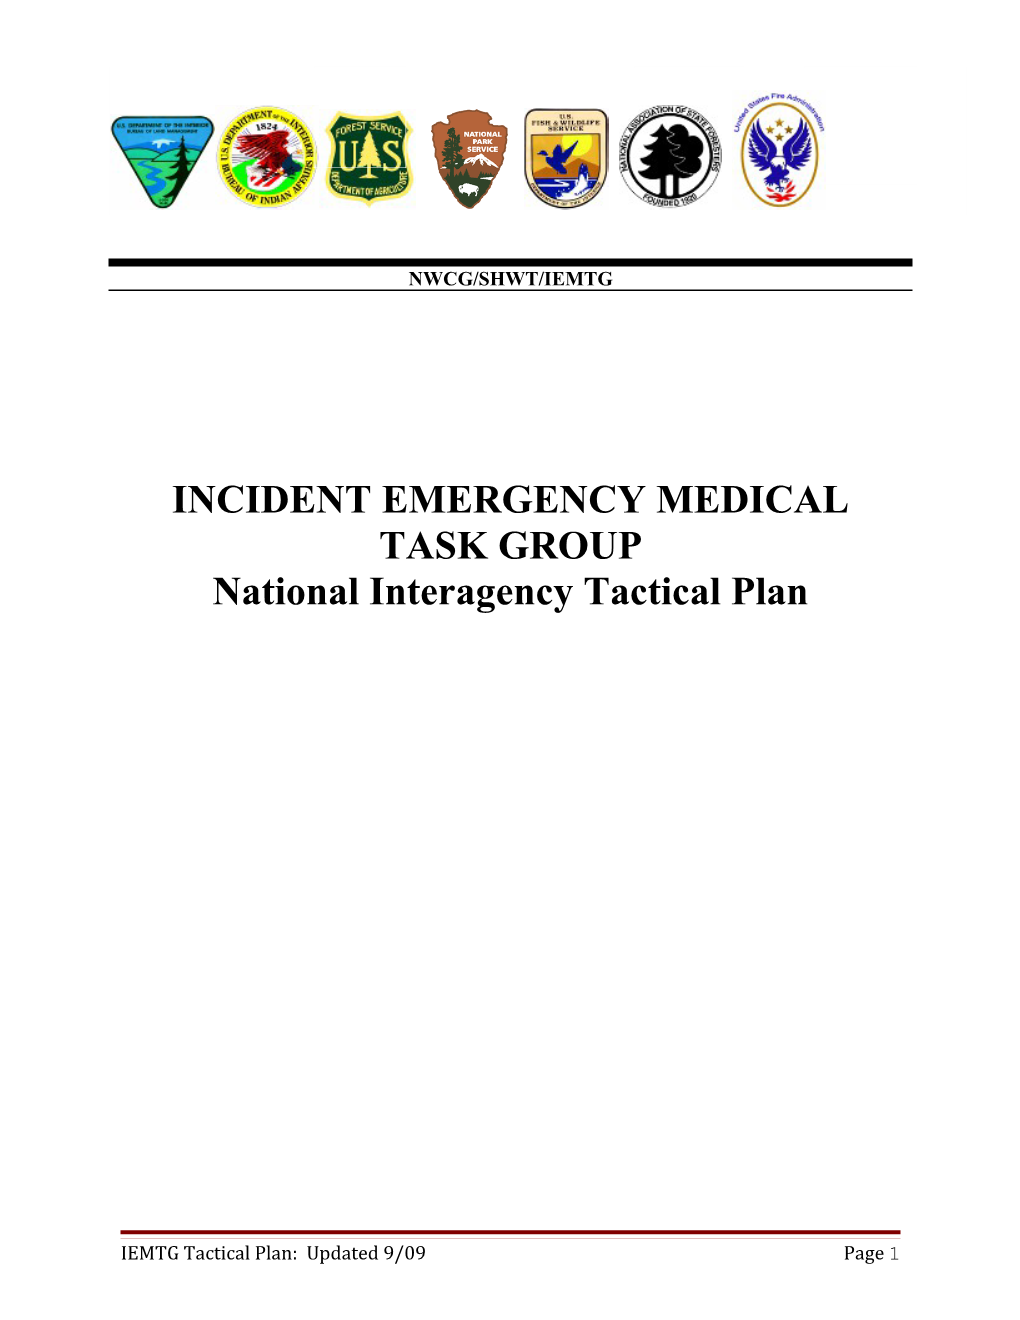 National Interagency Tactical Plan